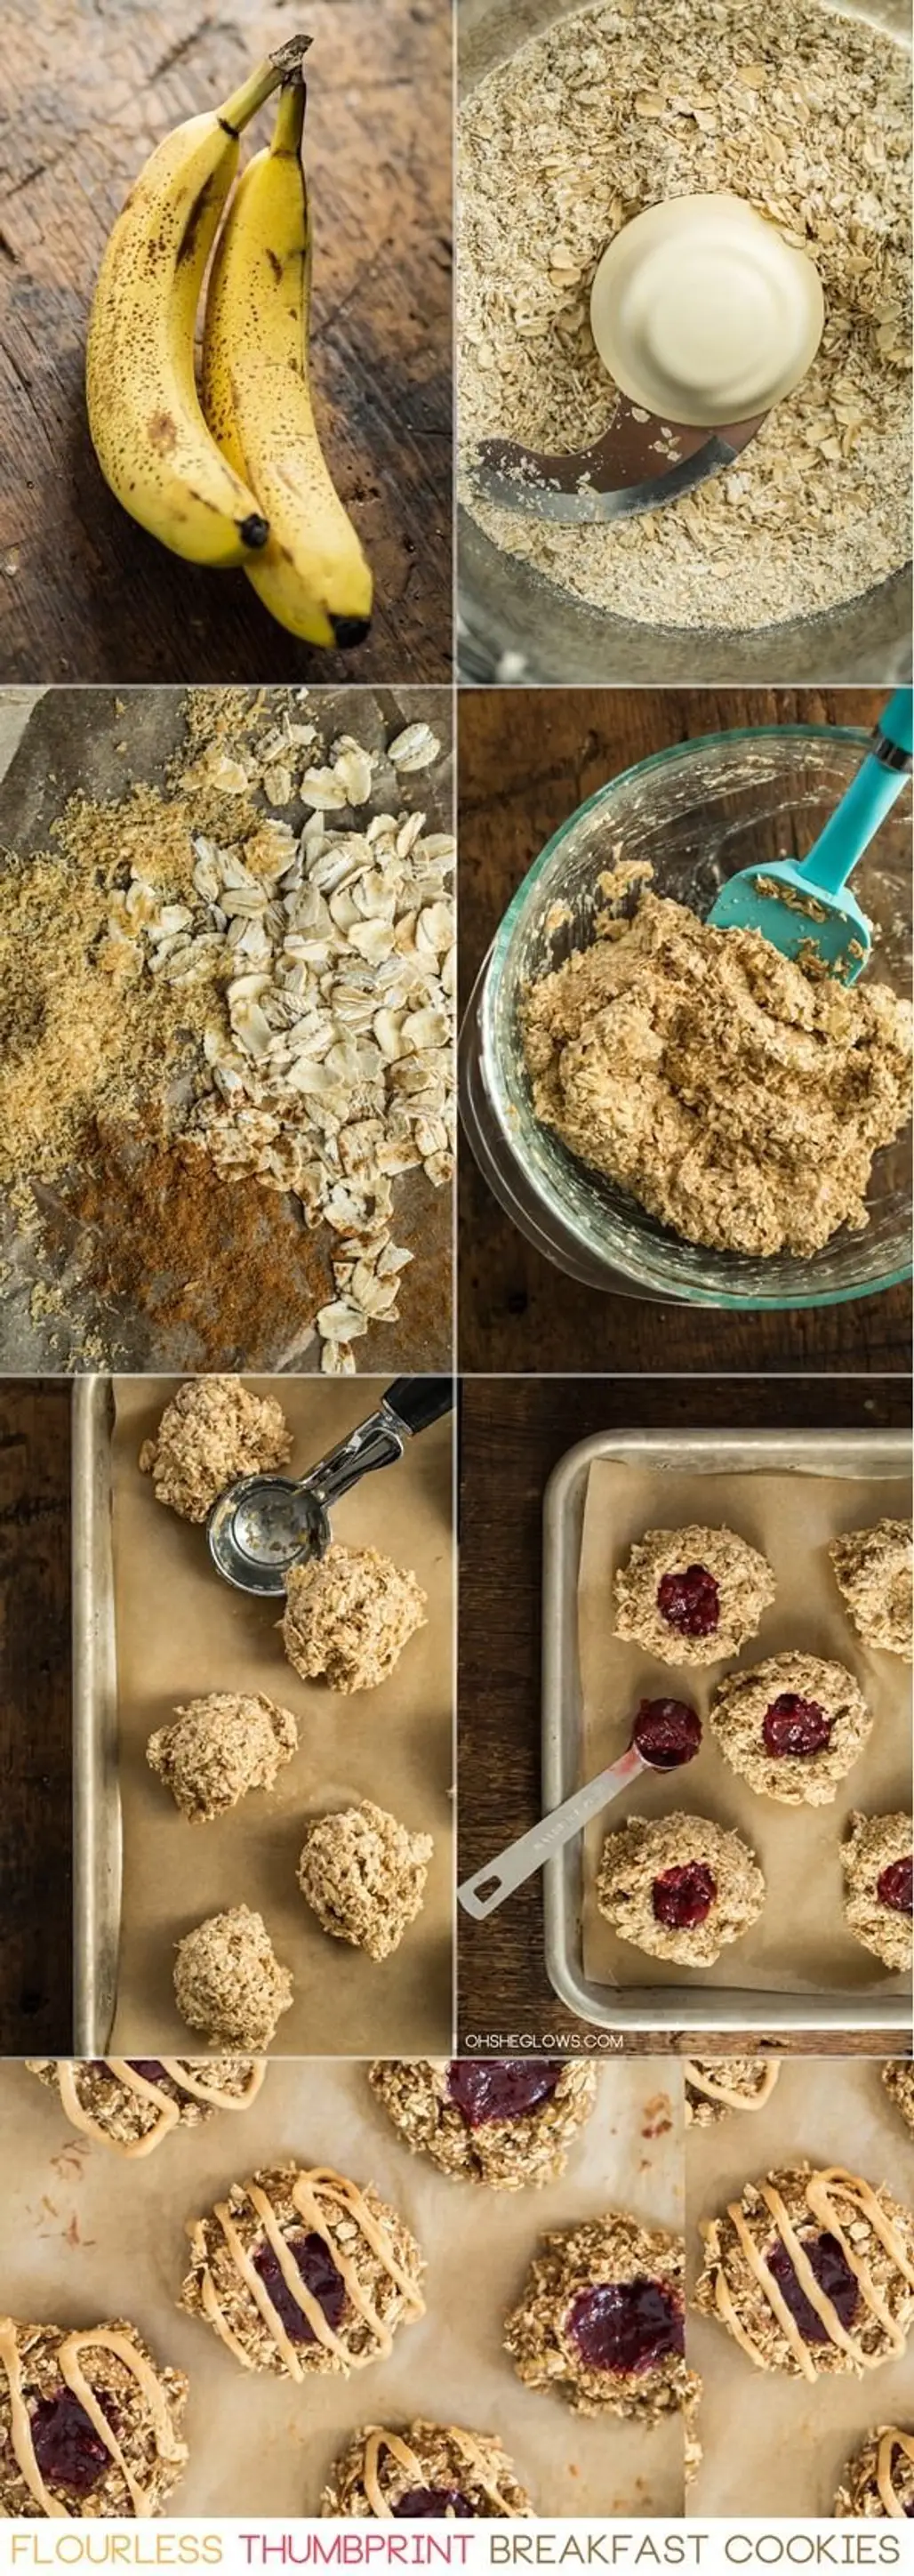 Flourless Thumbprint Breakfast Cookies